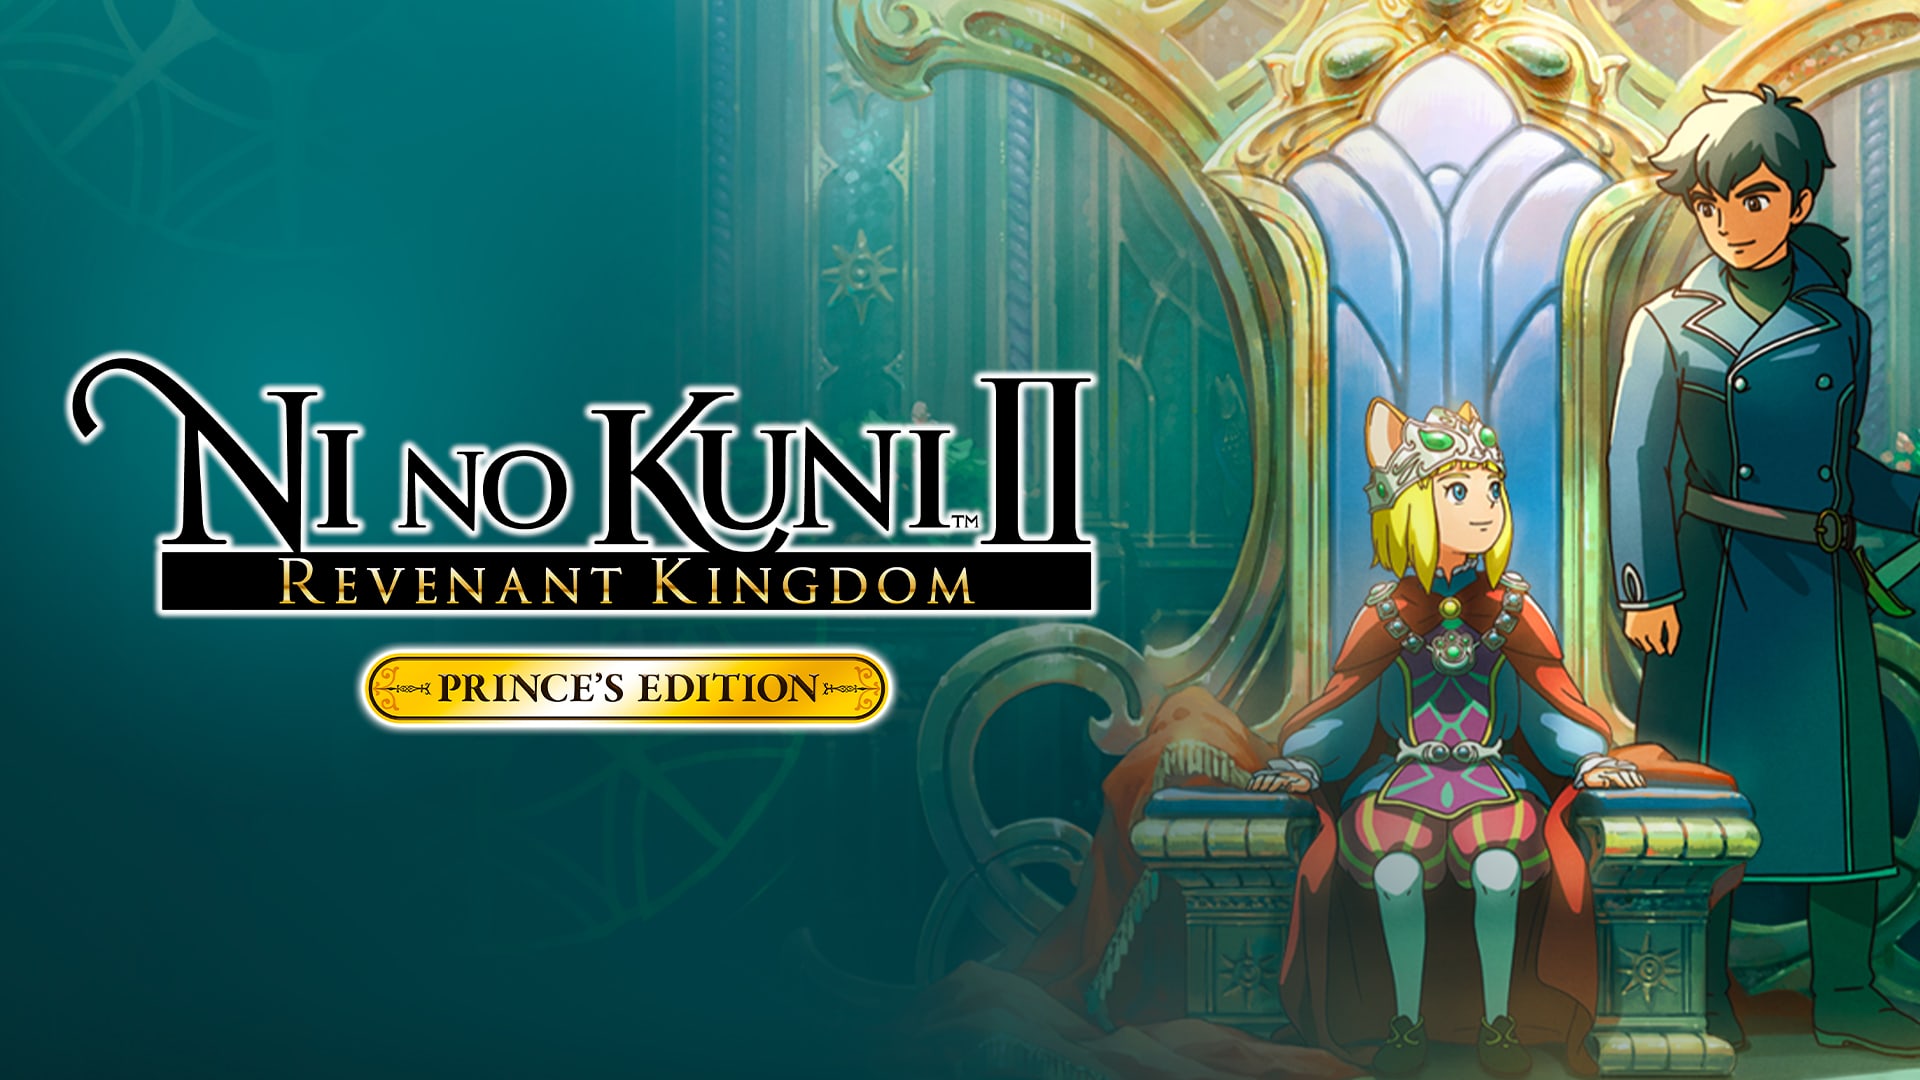 Ni no Kuni™ II: Revenant Kingdom PRINCE'S EDITION